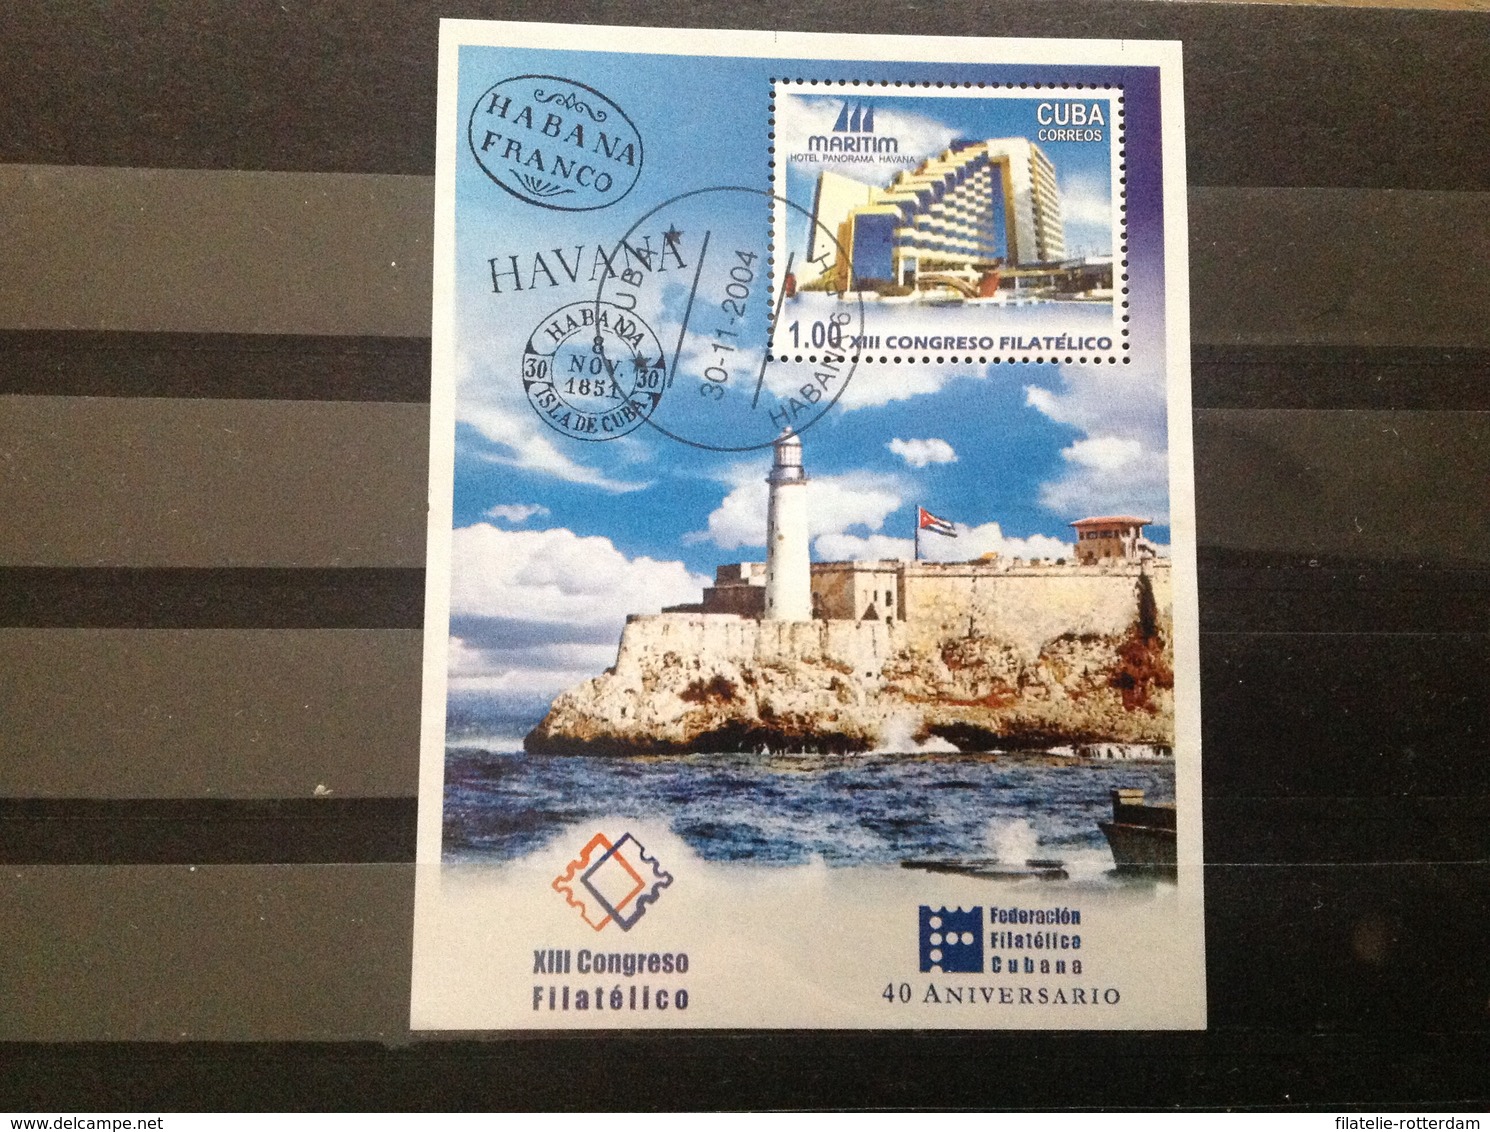 Cuba - Sheet 40 Jaar Filatelie Federatie (1) 2004 - Used Stamps